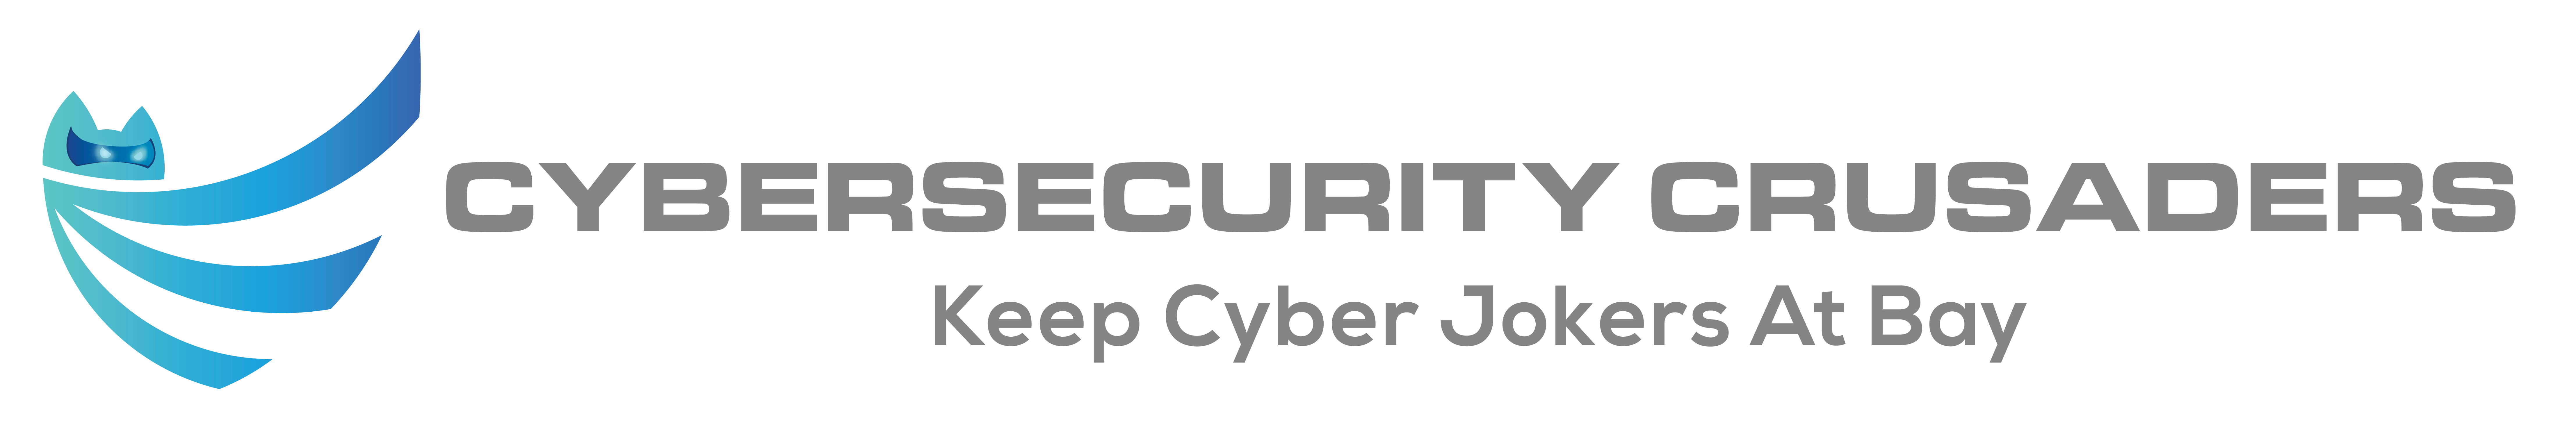 Cybersecurity Crusaders